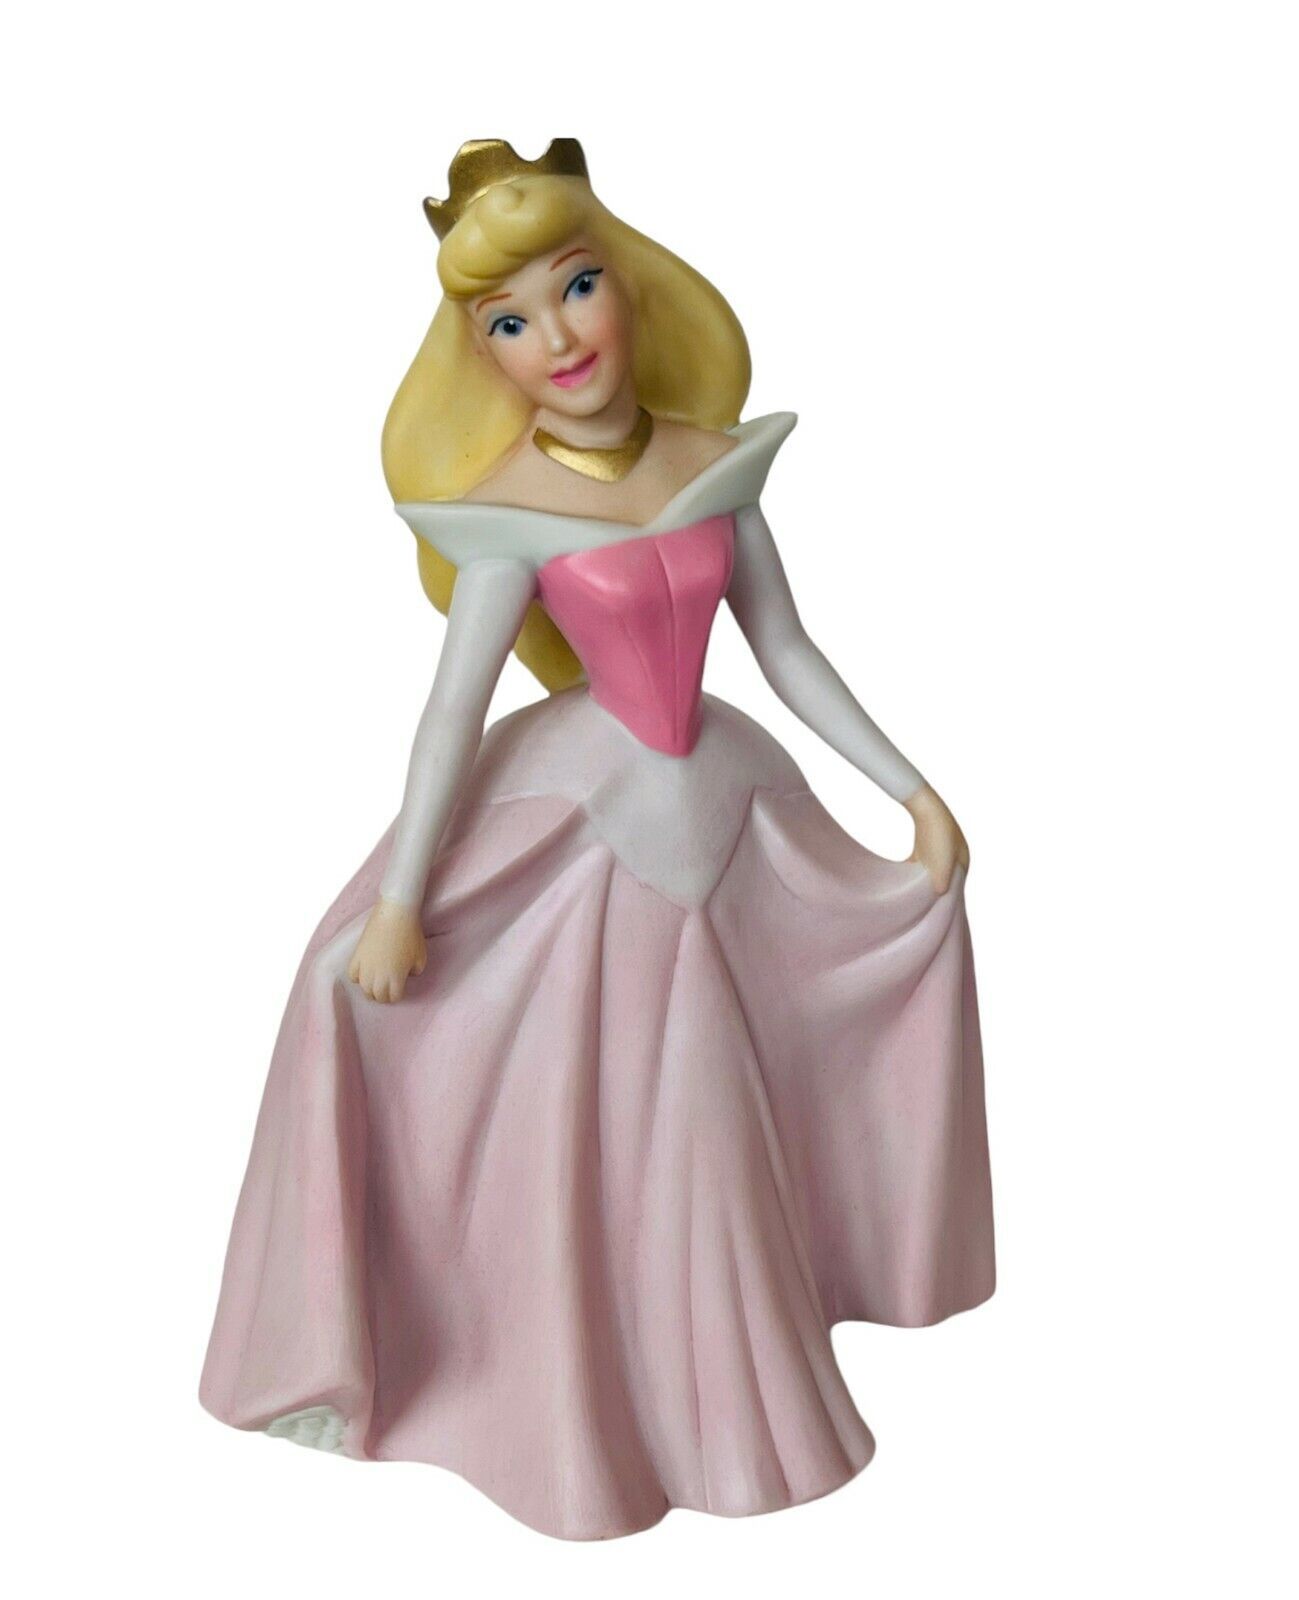 Primary image for Sleeping Beauty Figurine vtg Walt Disney porcelain sculpture Princess Aurora 6"